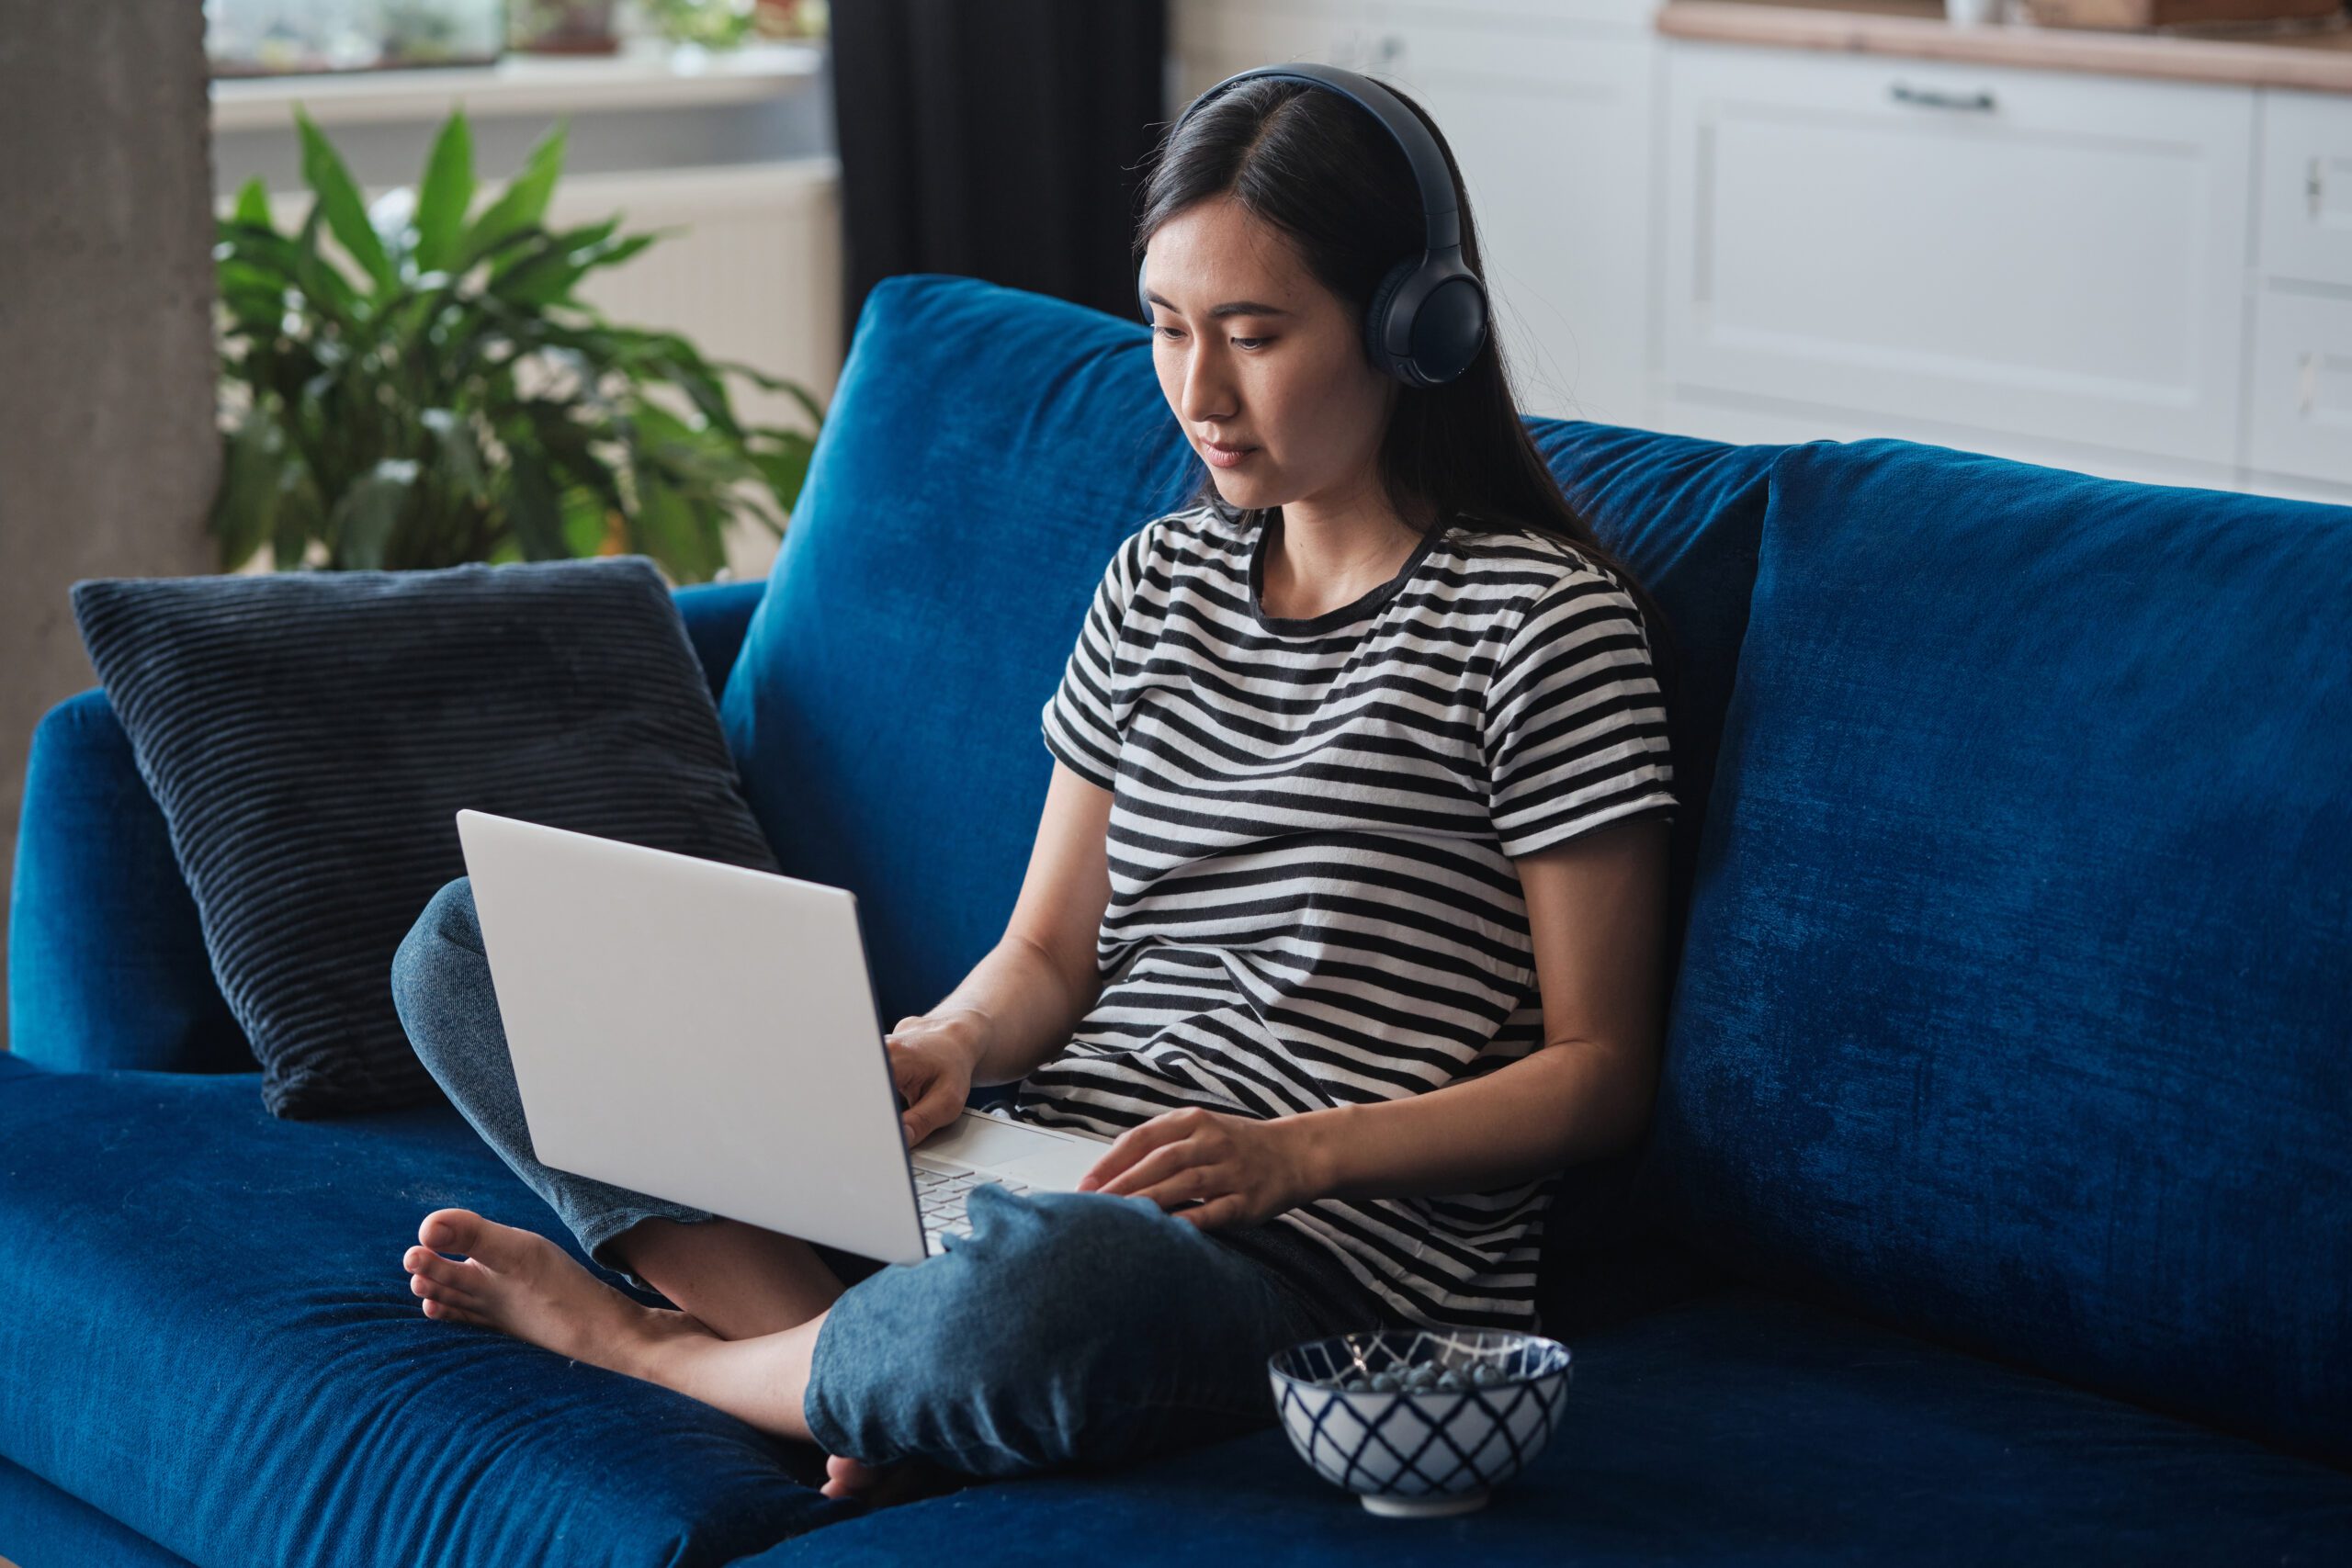 A focused woman wearing headphones sitting on sofa using laptop